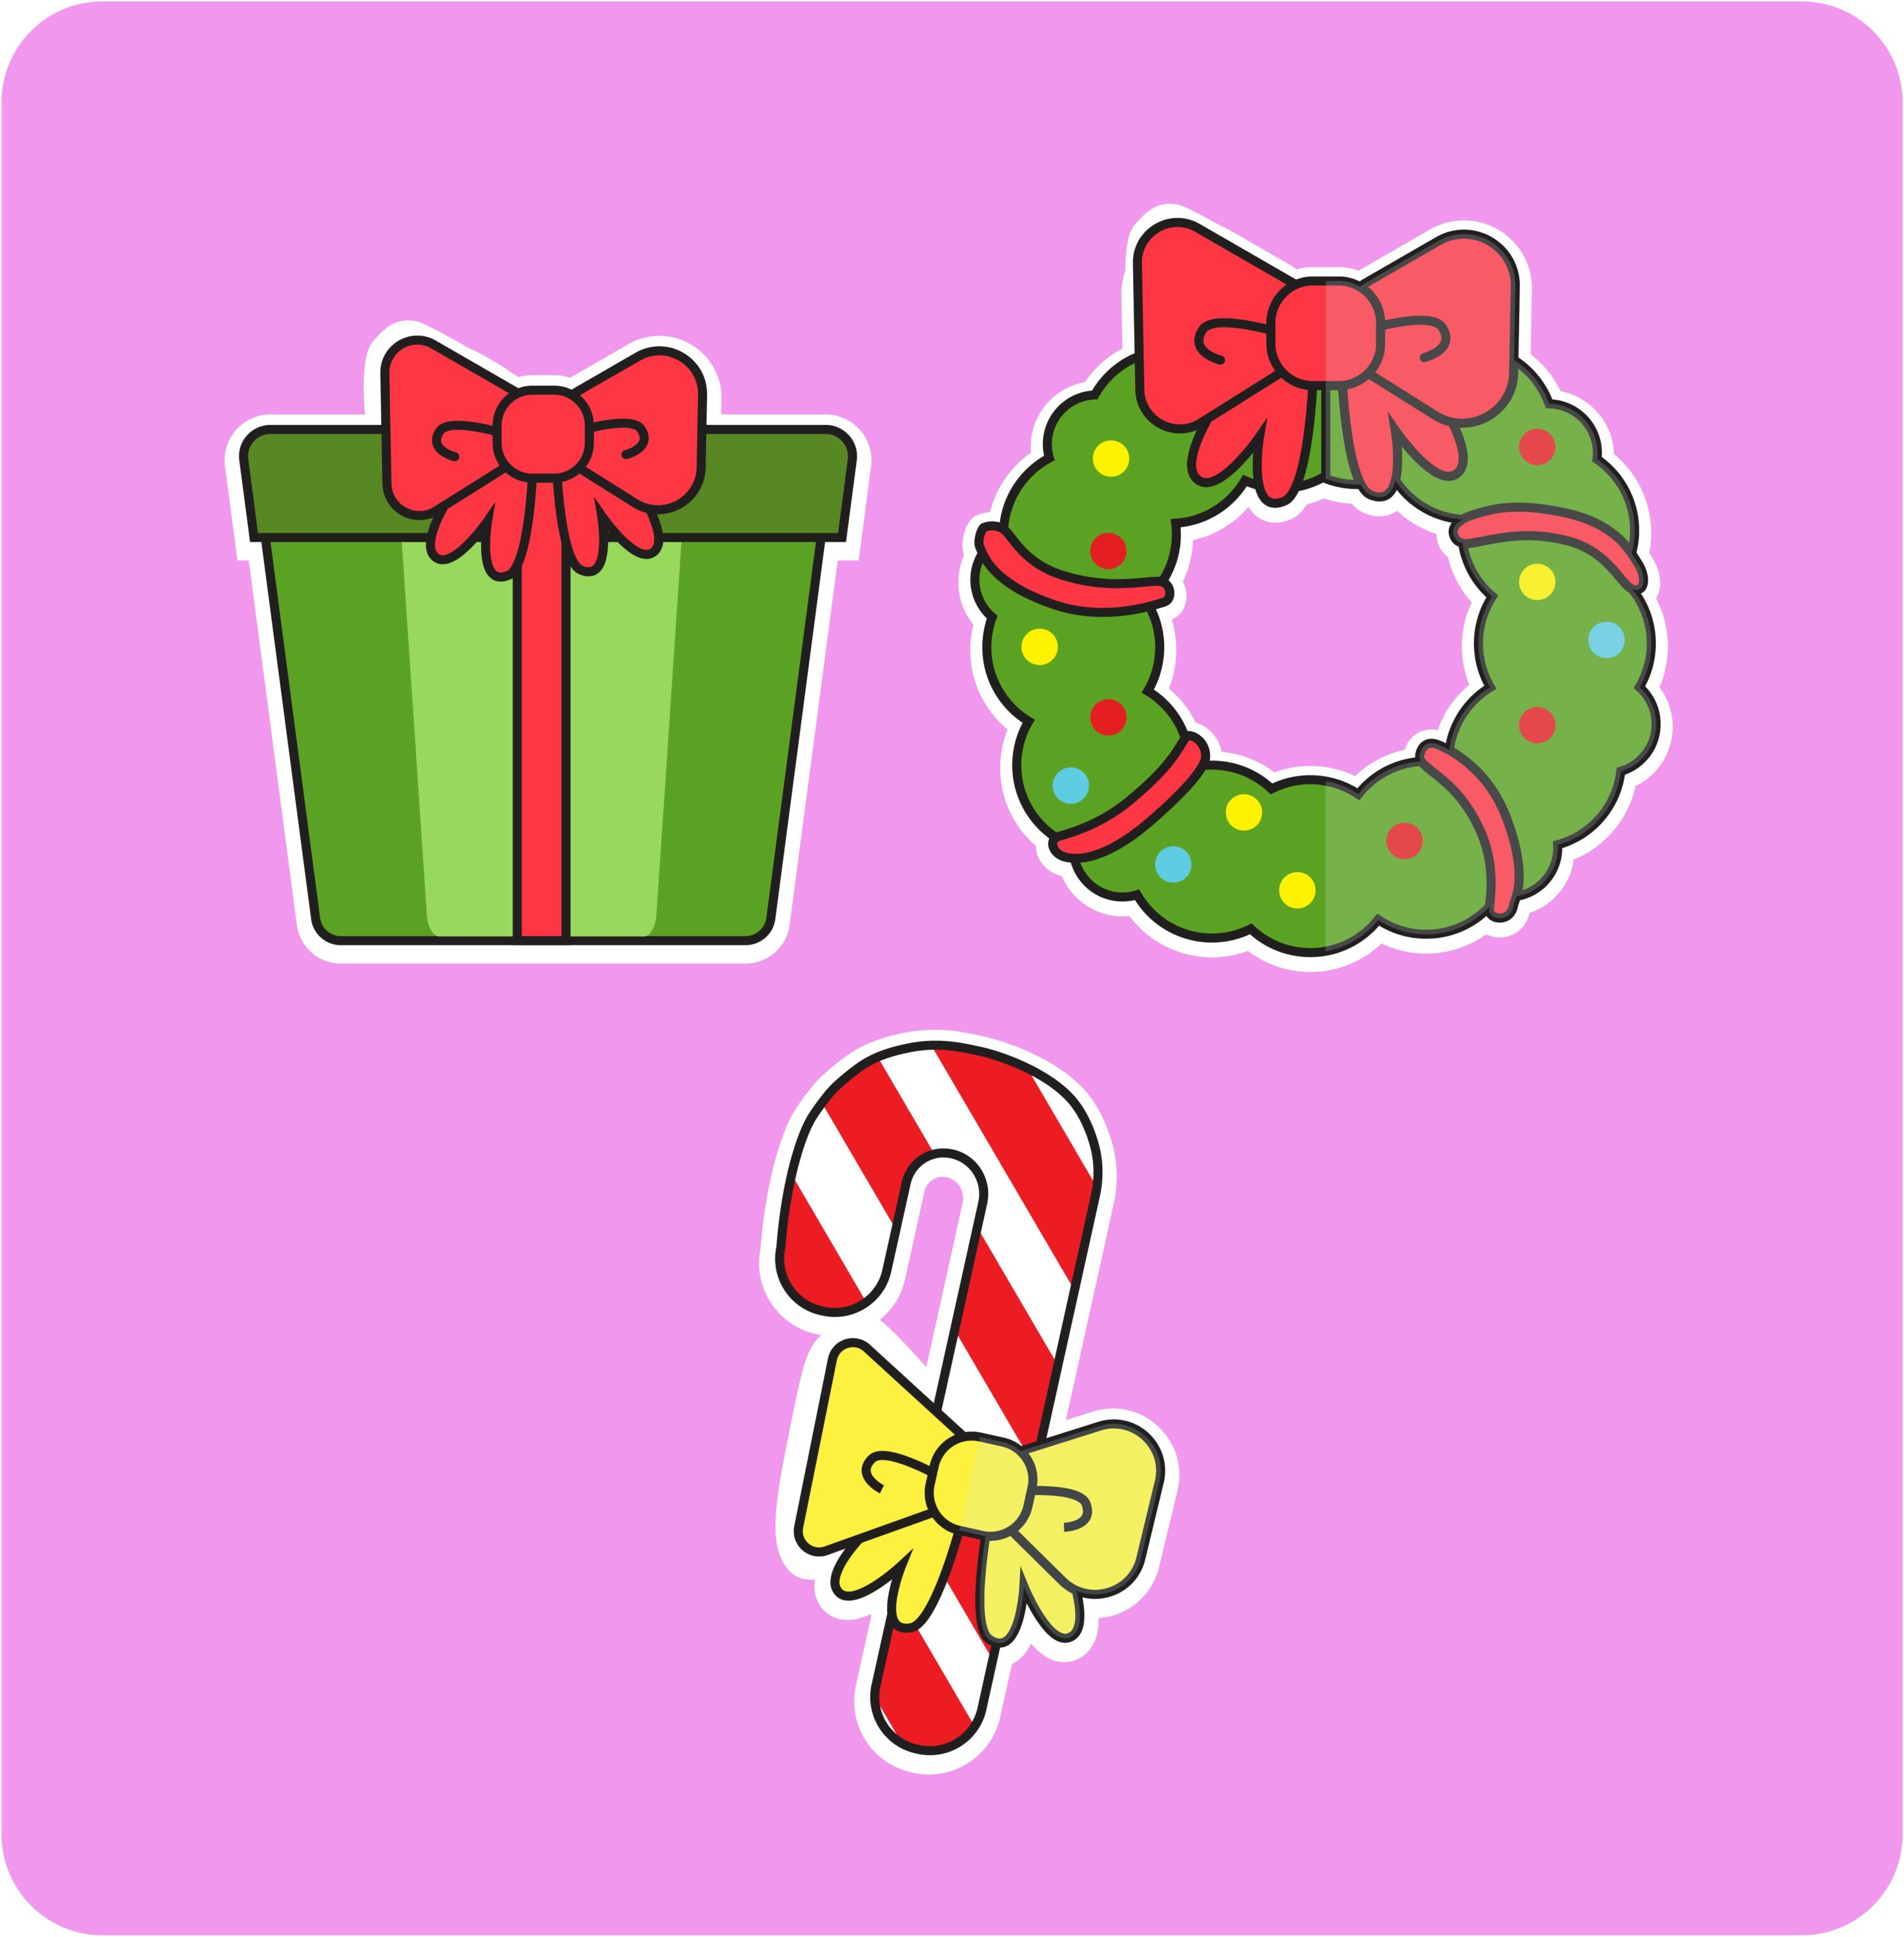 Cute Christmas Sticker Designs cover image.